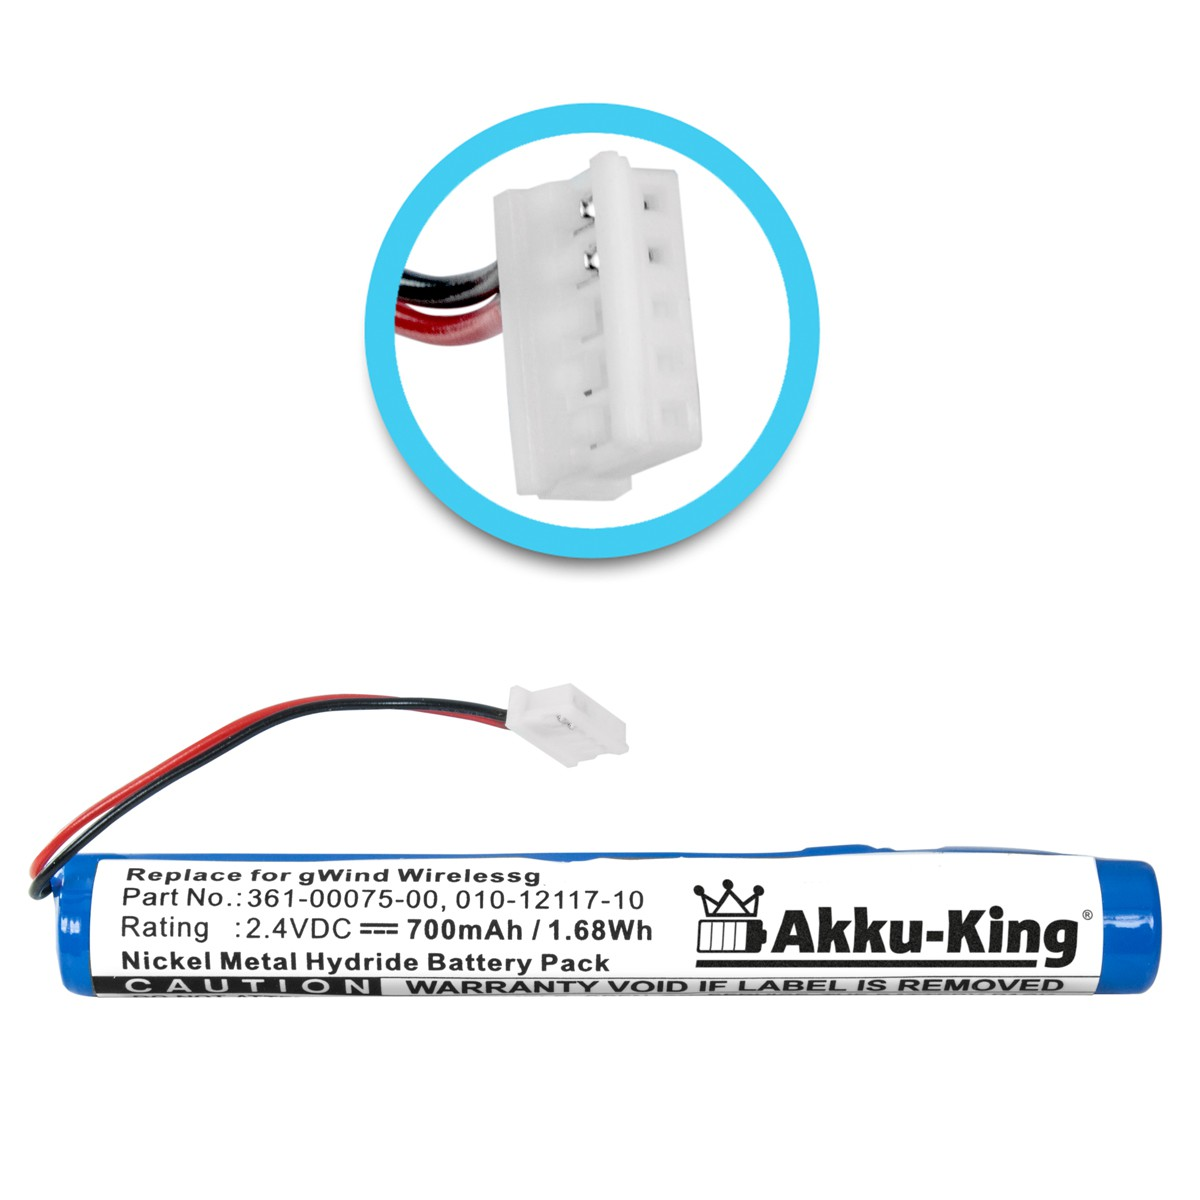 kompatibel Ni-MH mit Geräte-Akku, Akku Volt, 700mAh 361-00075-00 2.4 Garmin AKKU-KING